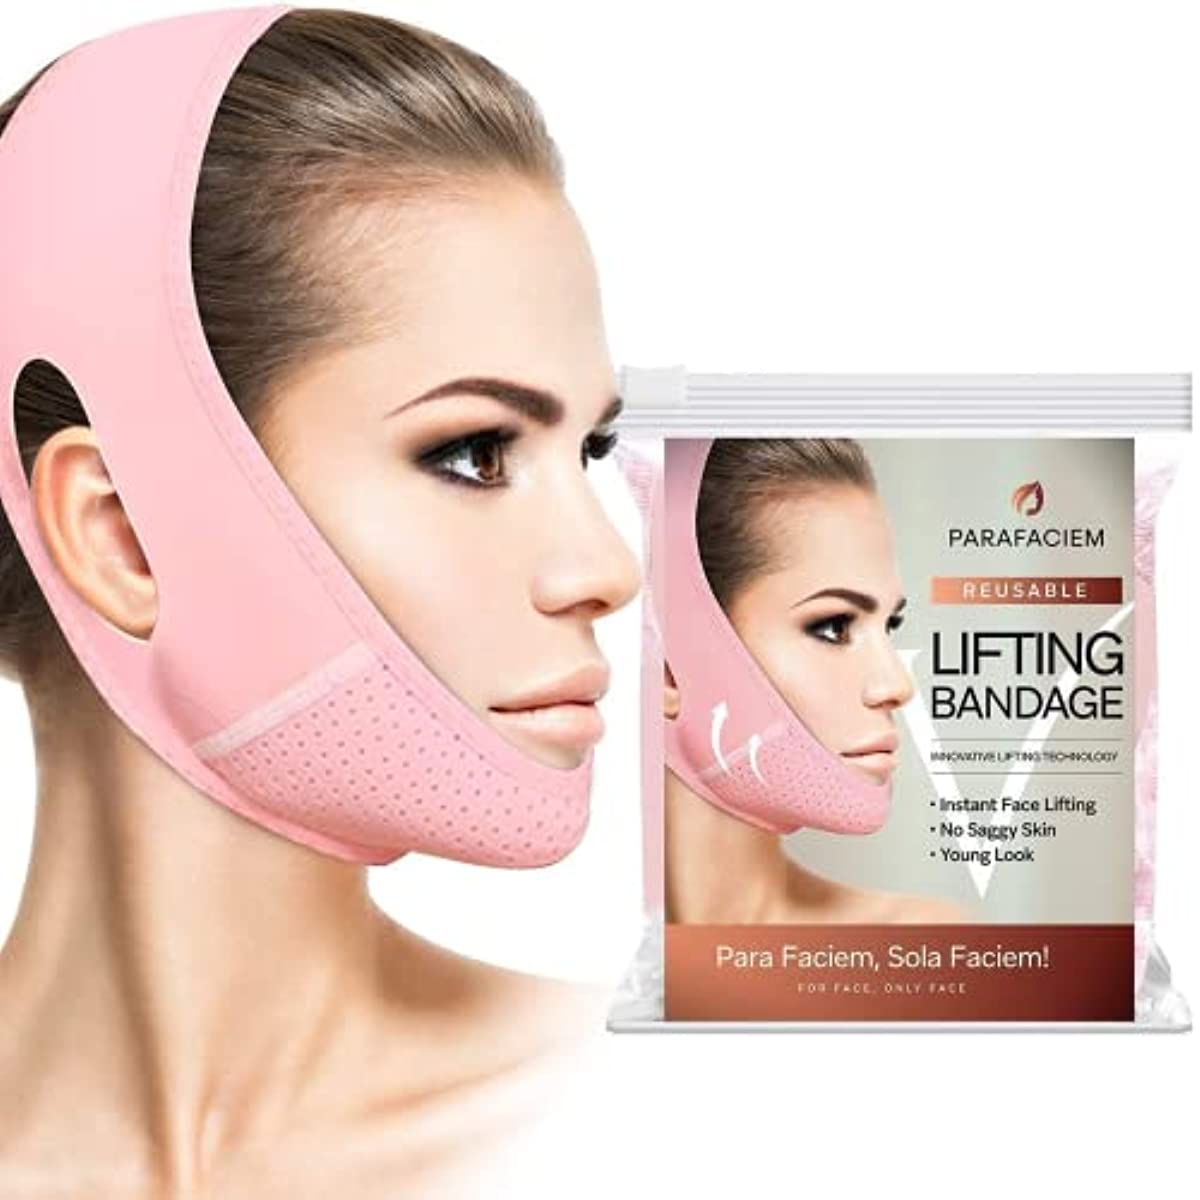 ParaFaciem Reusable V Line lifting Mask Facial Slimming Strap - Double Chin Reducer - Chin Up Mask Face Lifting Belt - V Shaped Slimming Face Mask